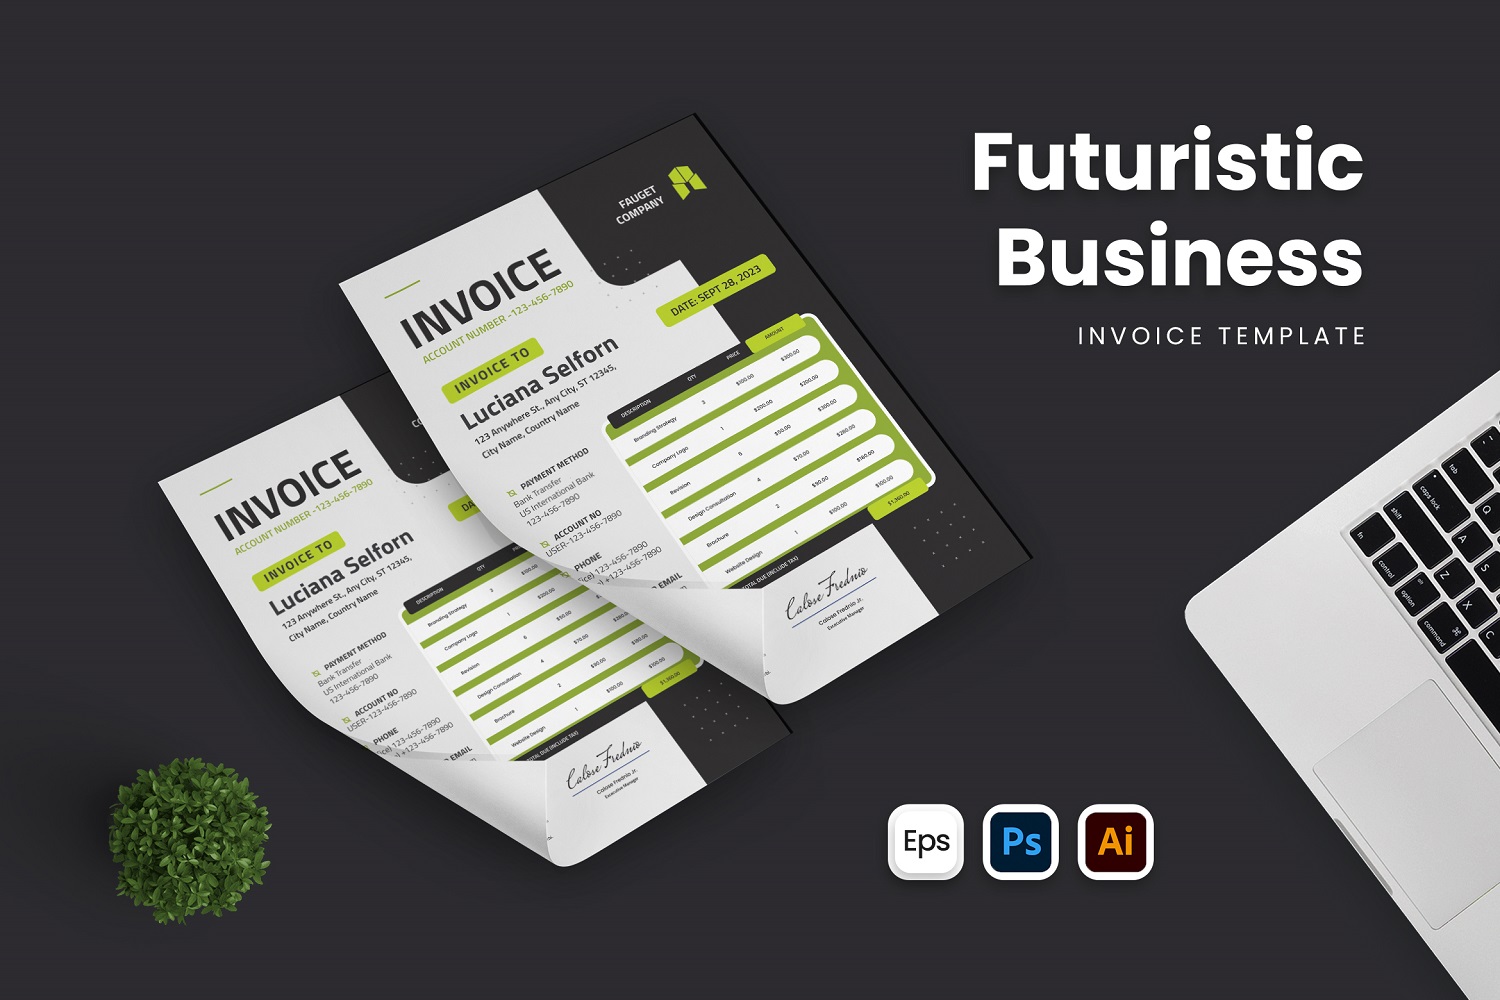 Futuristic Business Invoice